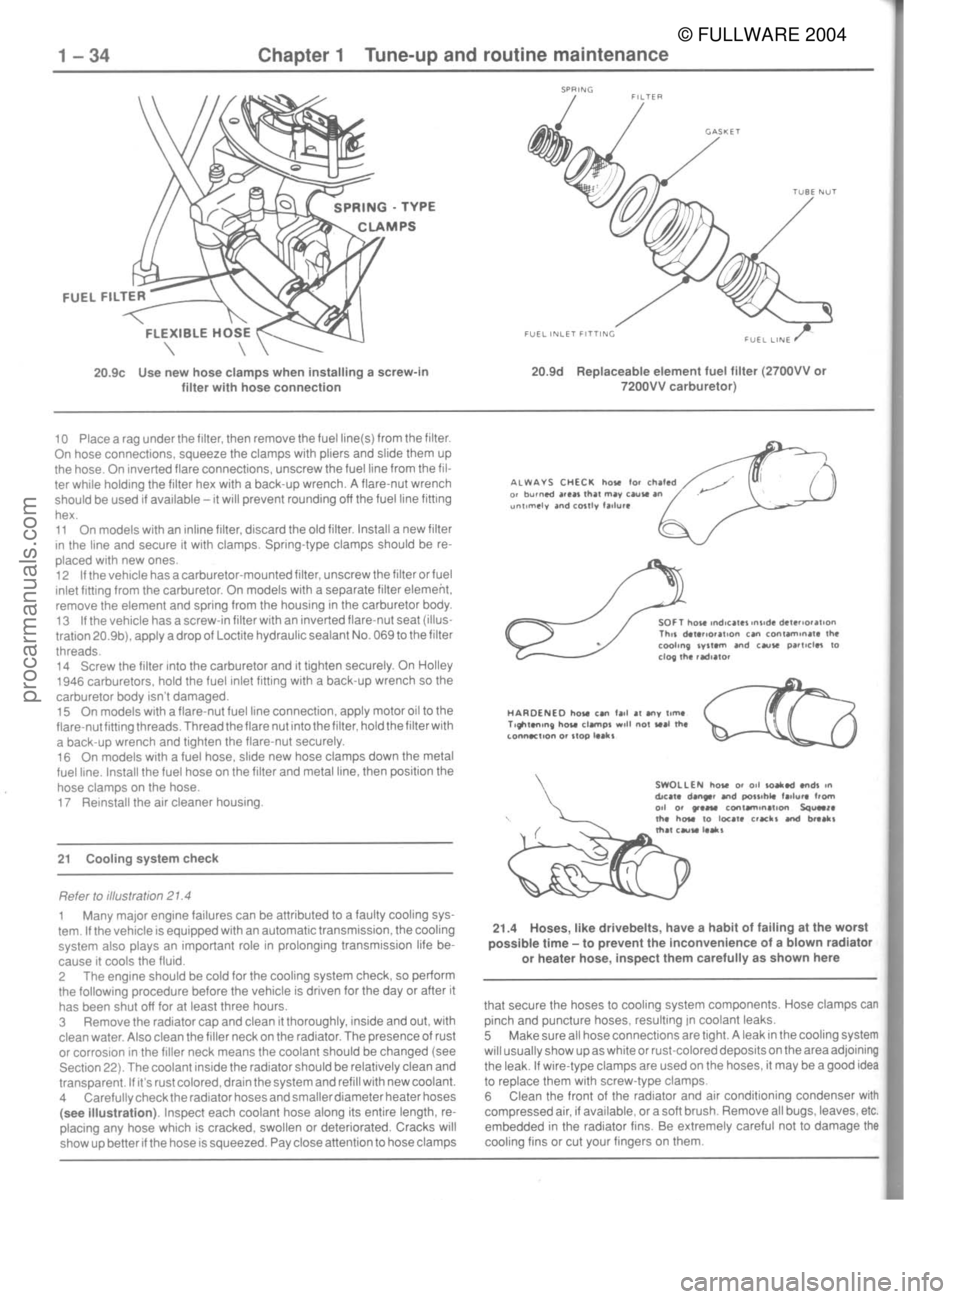 FORD MUSTANG 1979  Service Manual PDF © FULLWARE 2004procarmanuals.com 